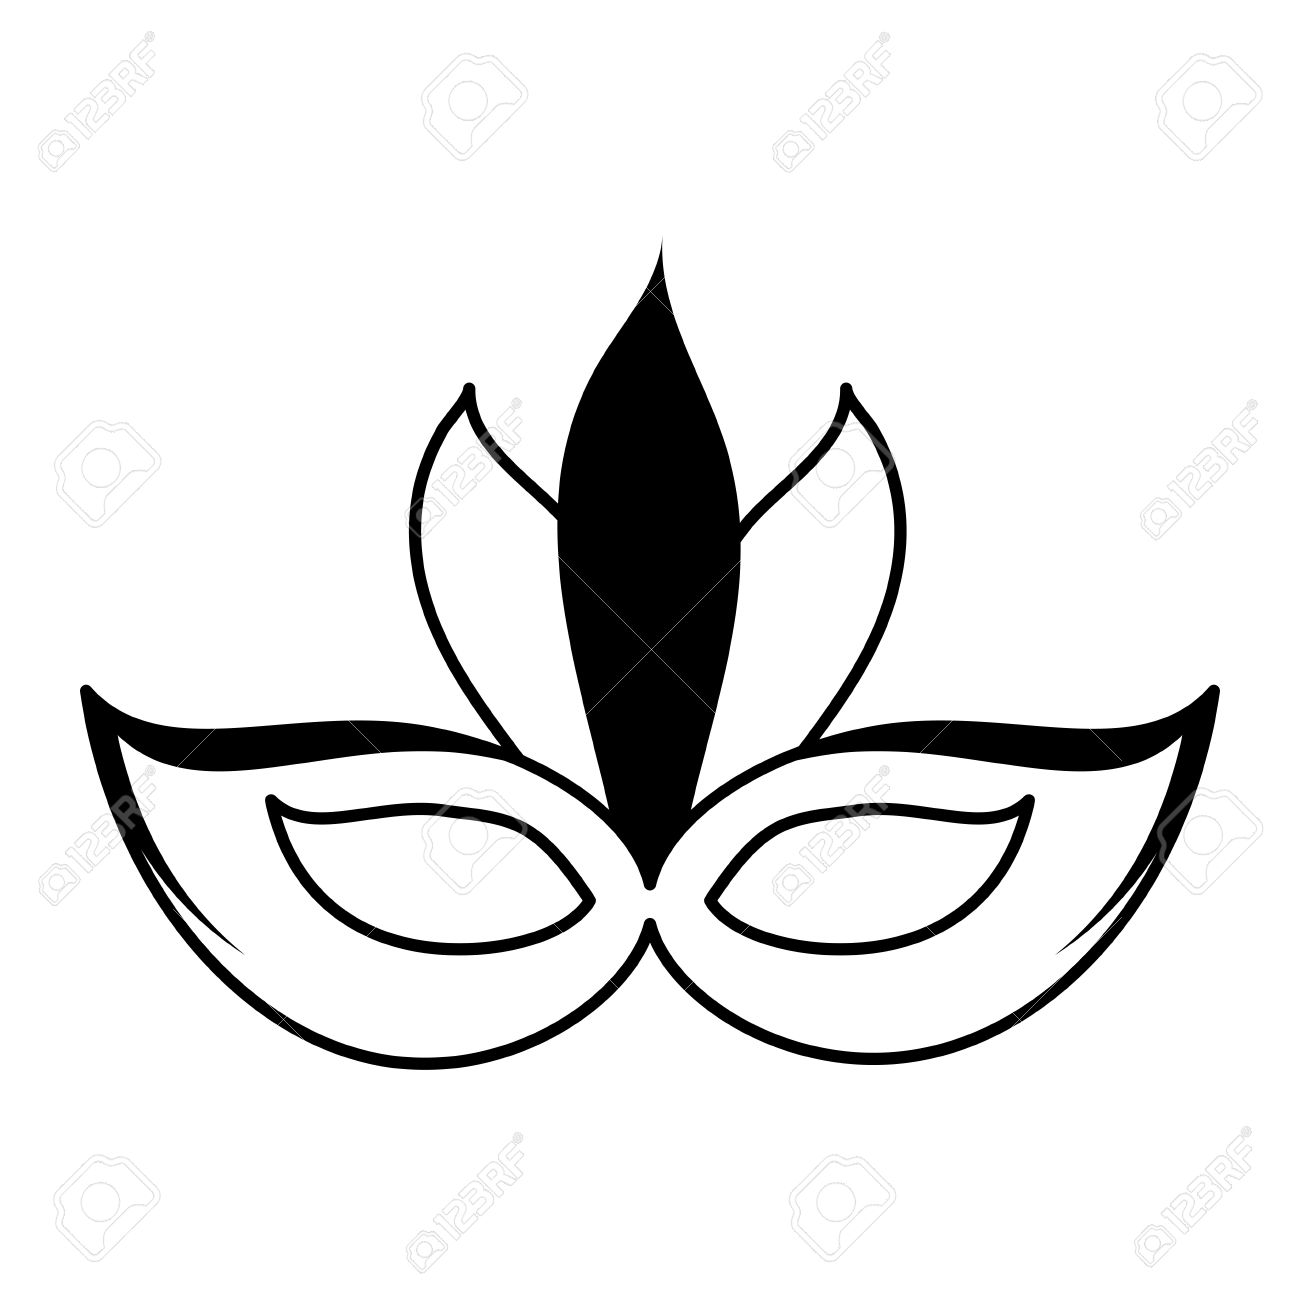 carnival mask icon image vector illustration design black and...